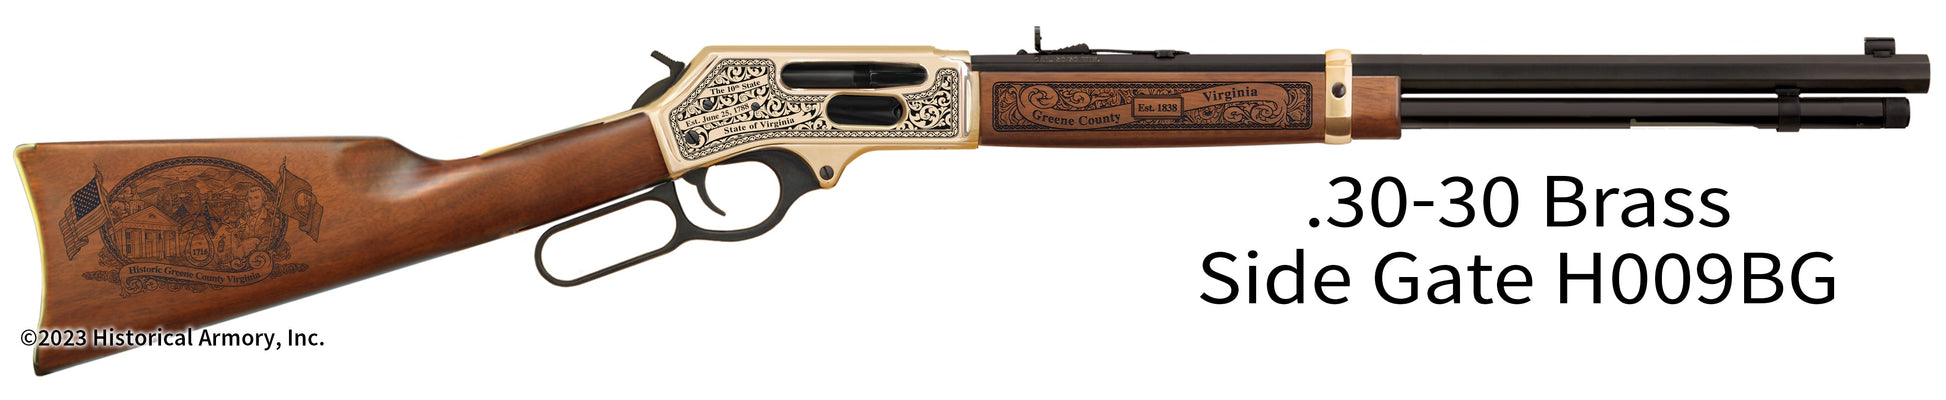 Greene County Virginia Engraved Henry .30-30 Brass Side Gate Rifle